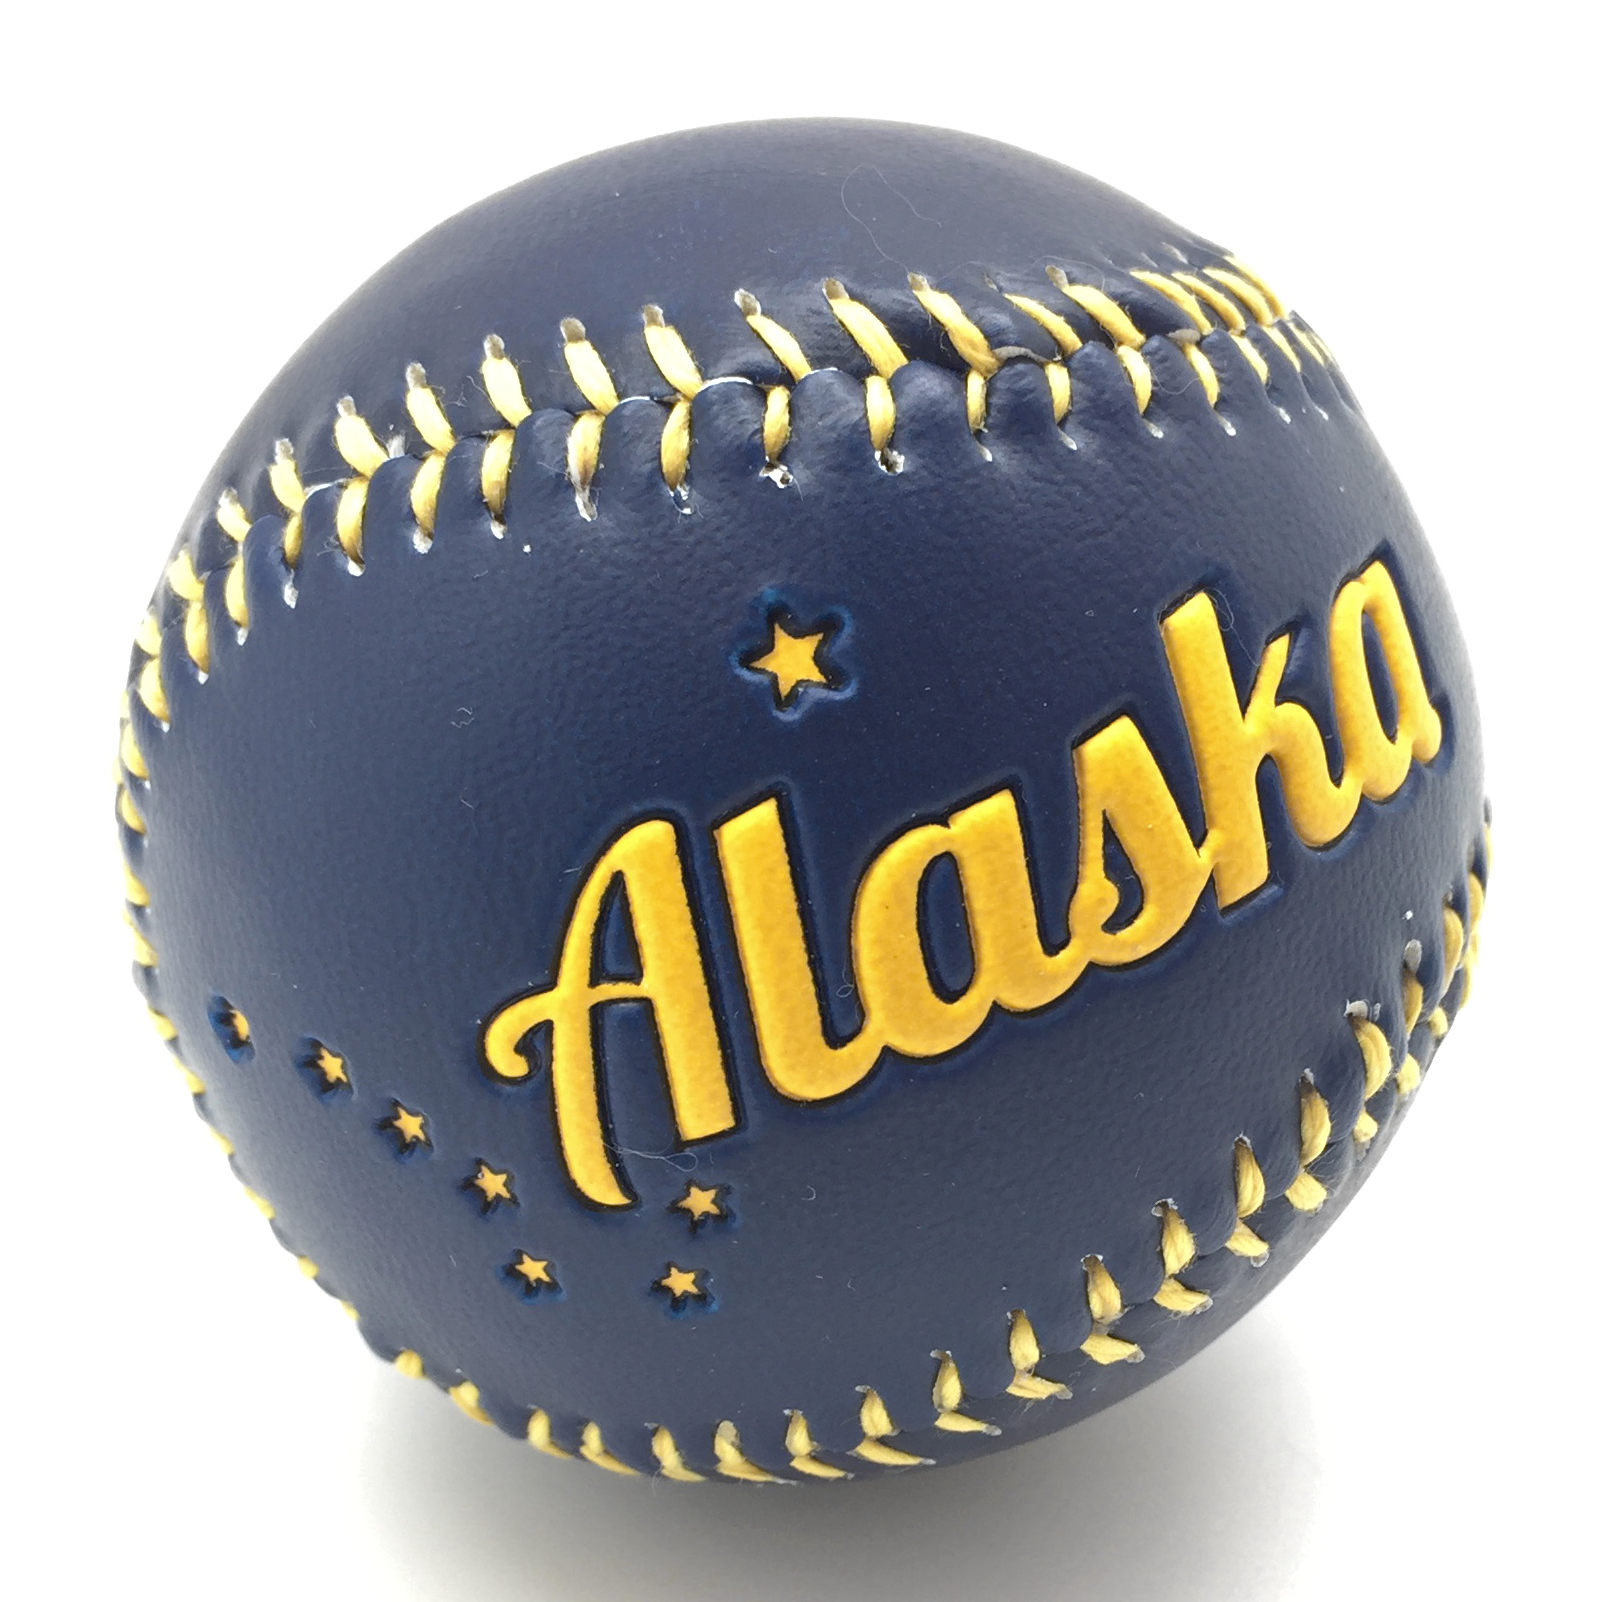 Alaska Dipper Baseball